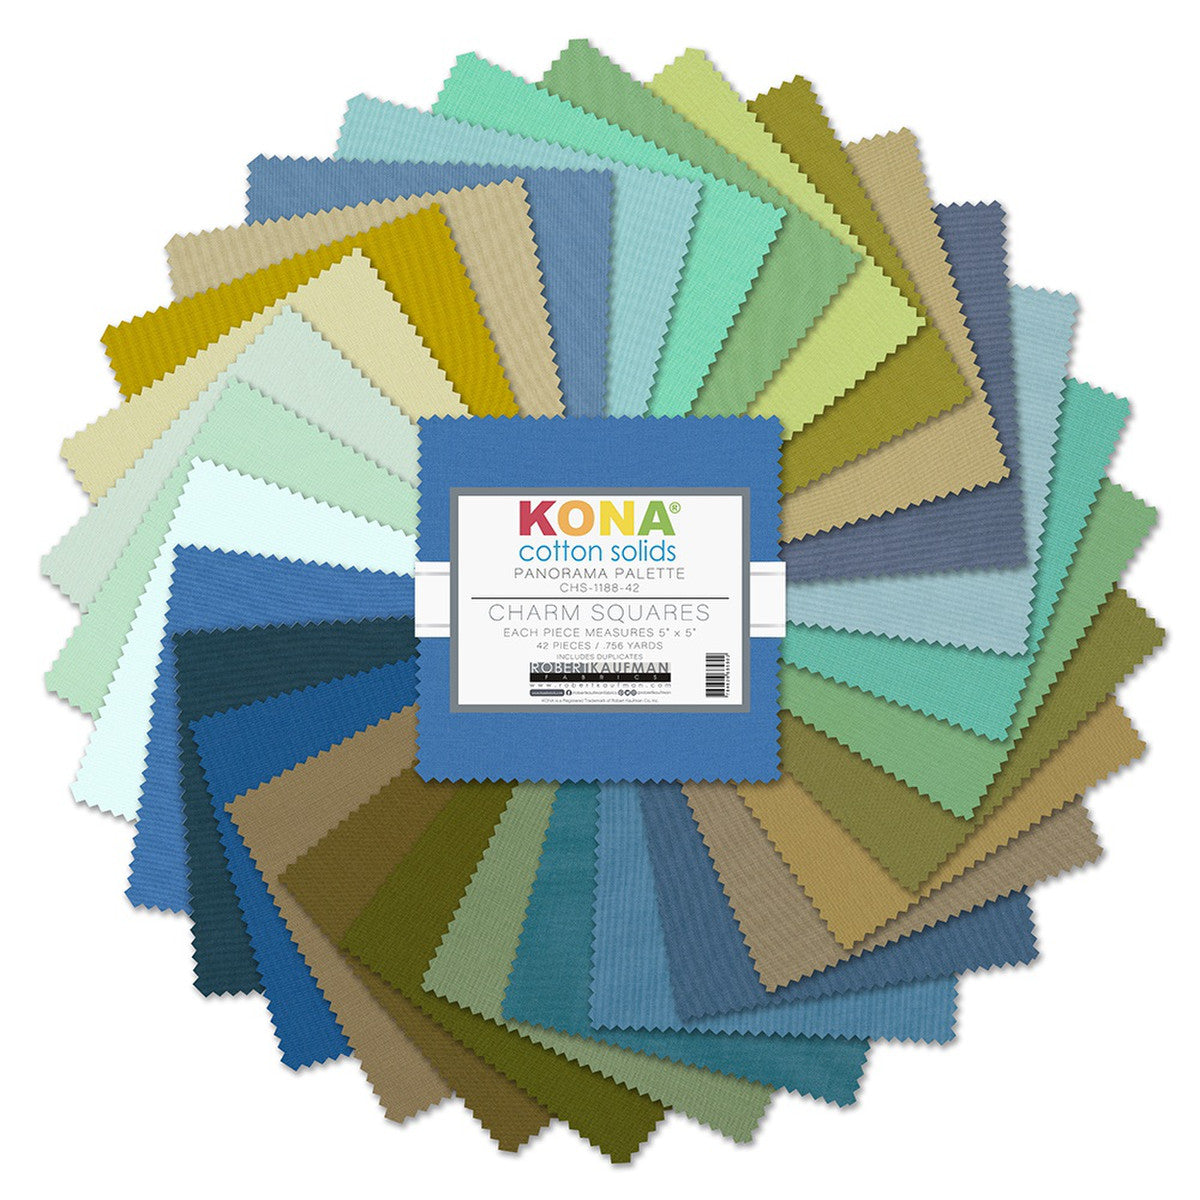 Panorama Palette - Kona Cotton Solids 5"x5" Charm Squares